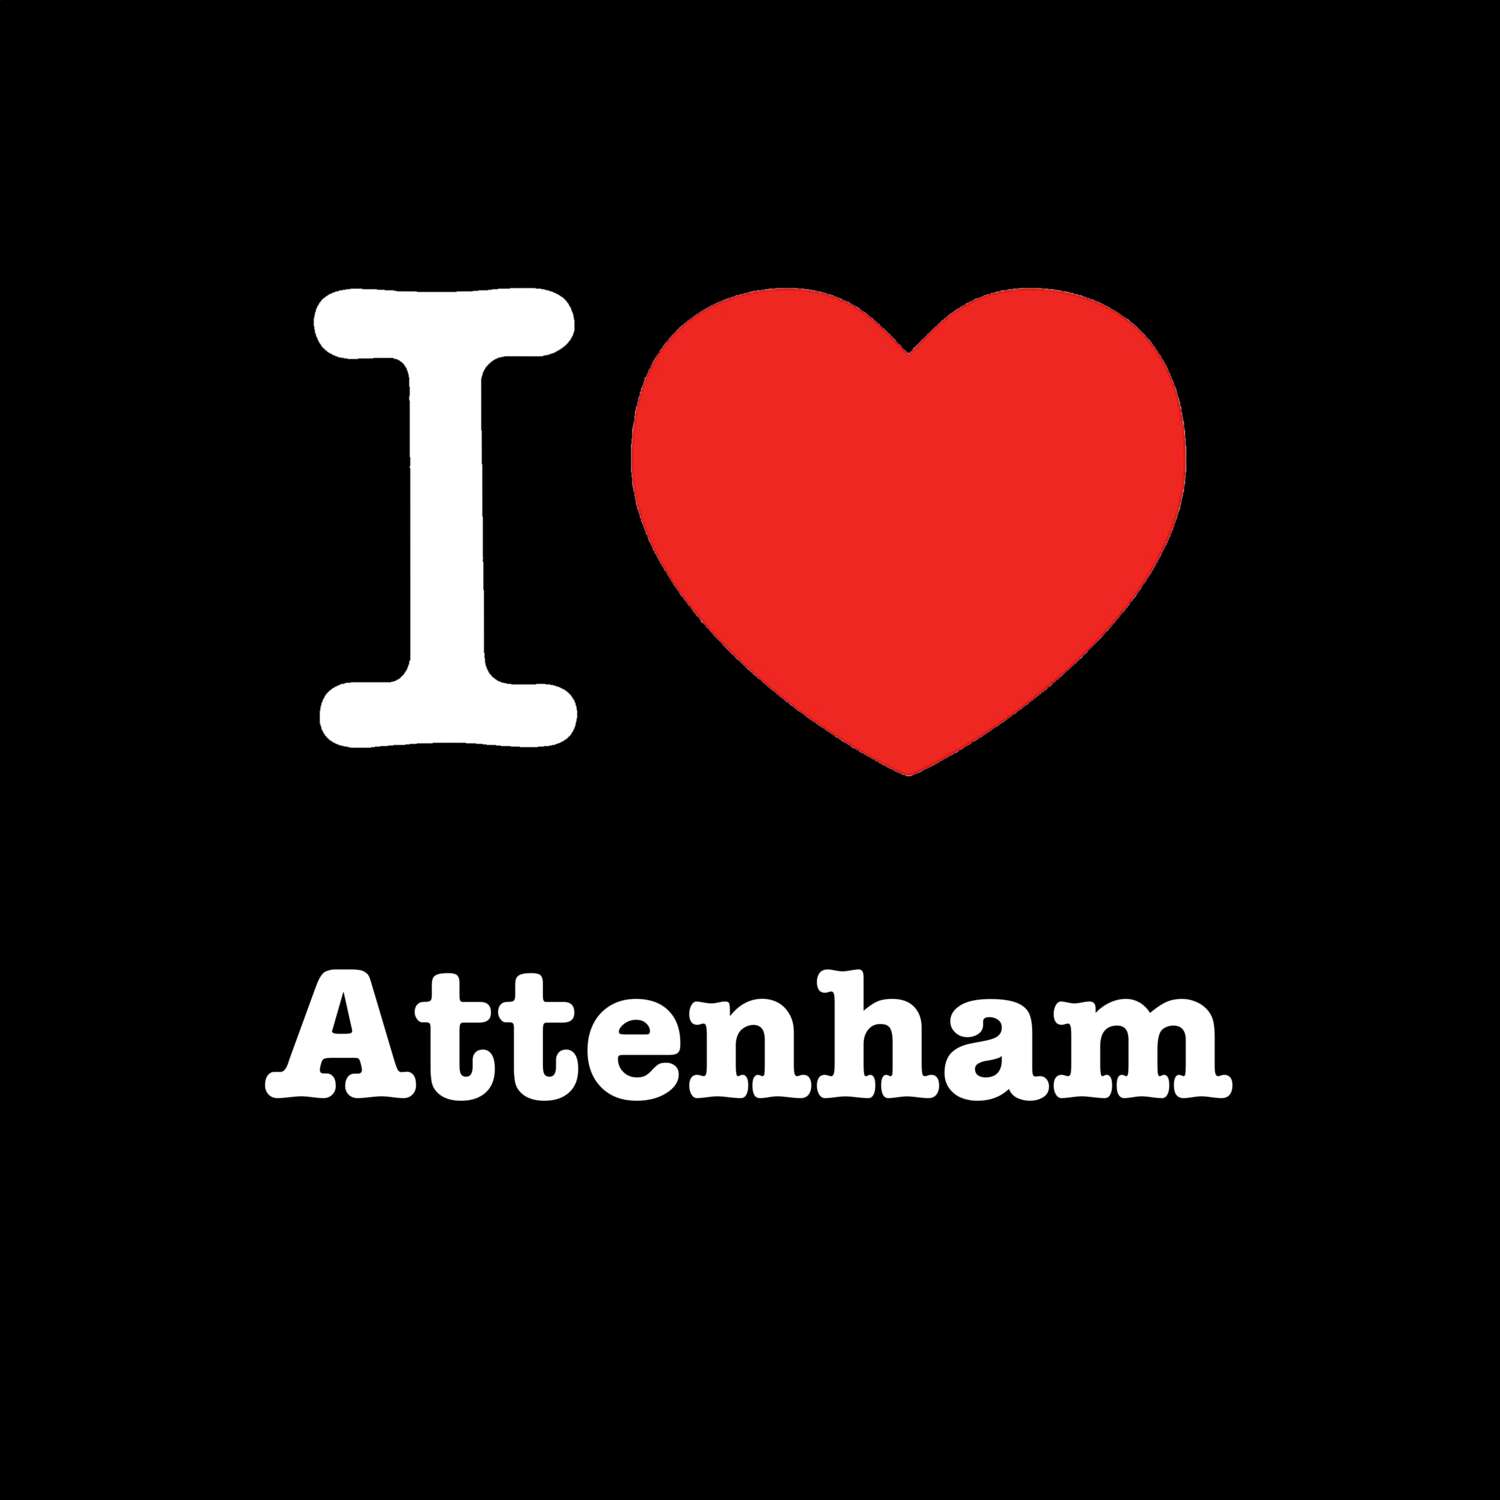 Attenham T-Shirt »I love«